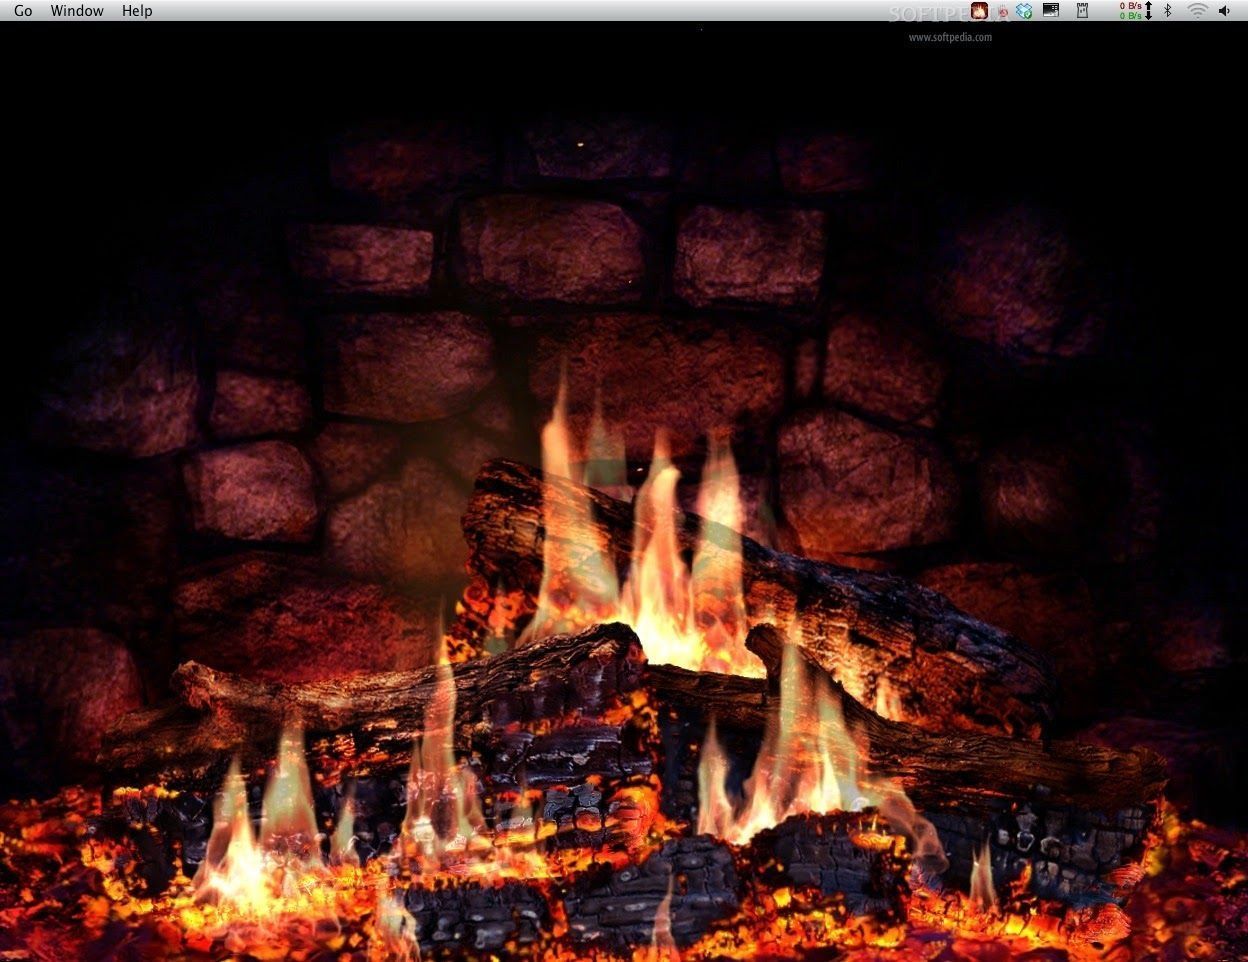 Fireplace Wallpaper For Desktop - Ideas de diseño de chimenea